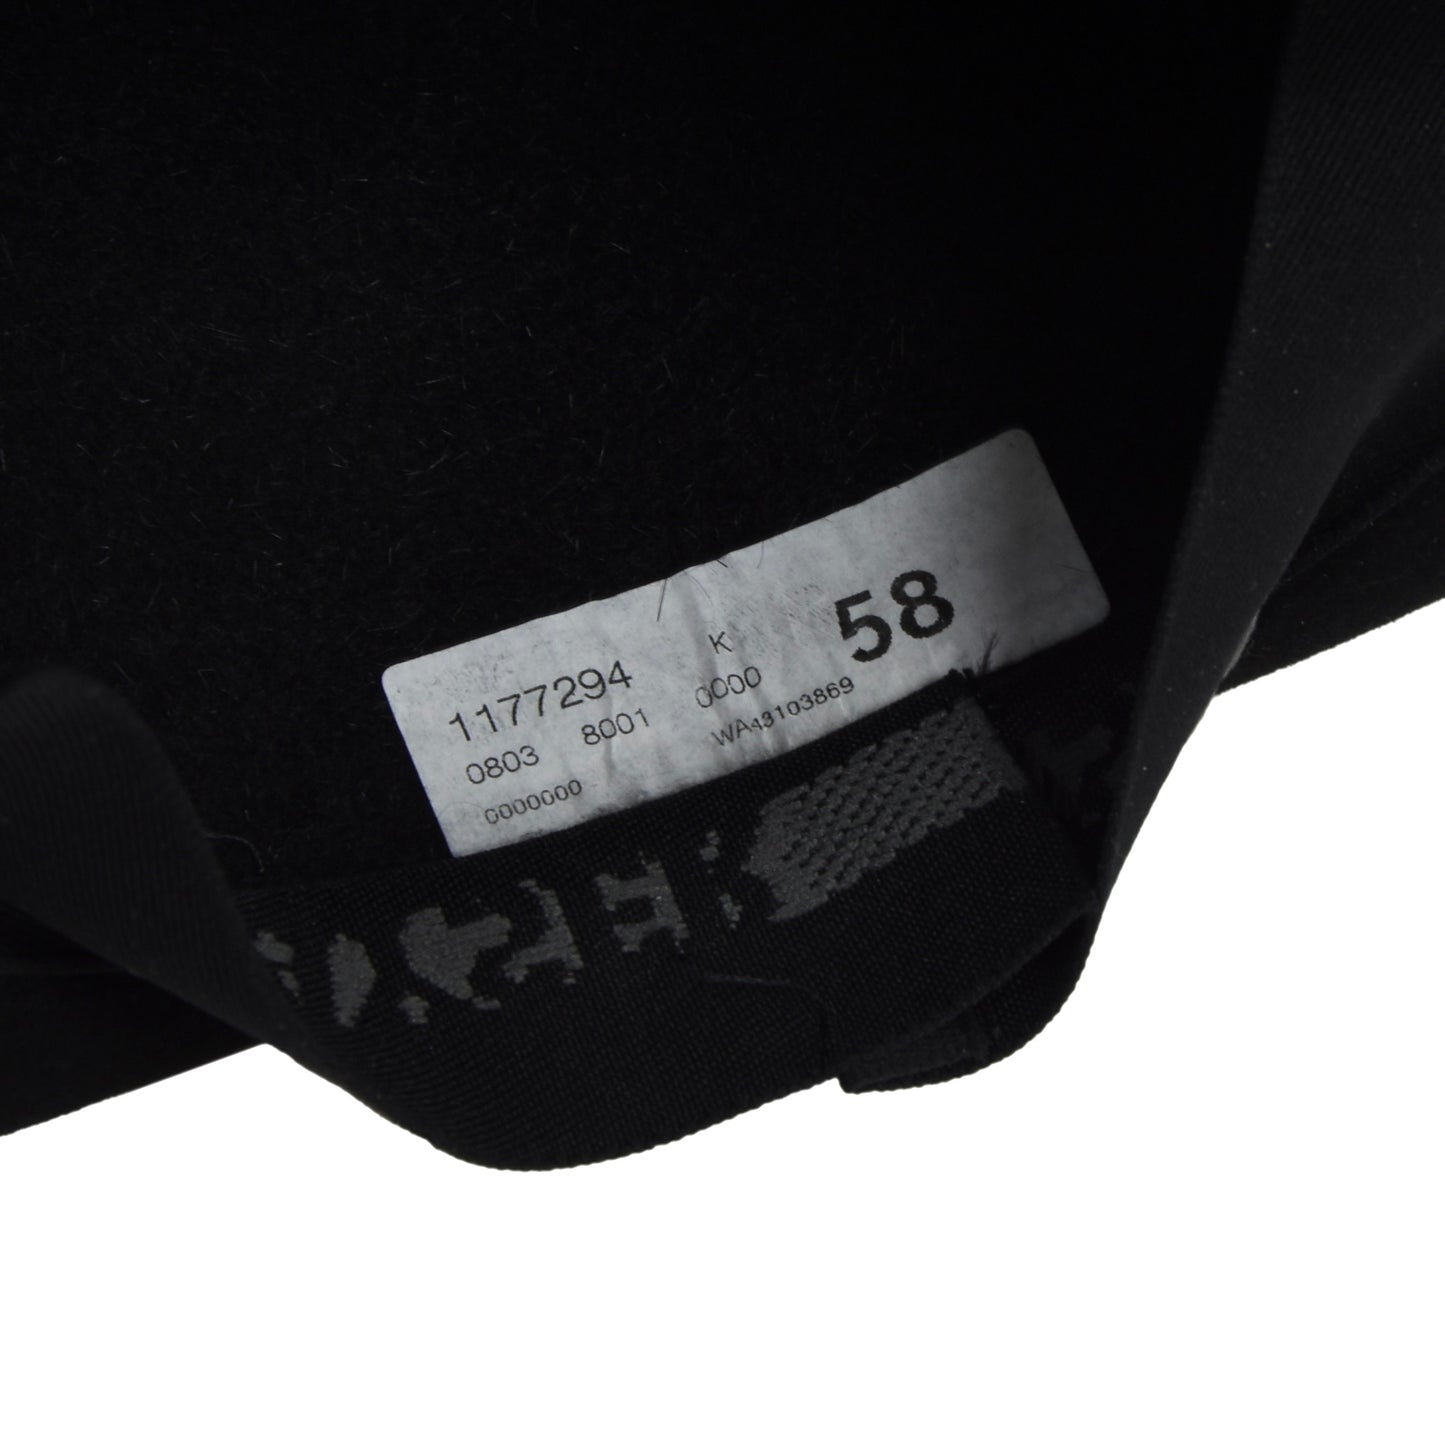 Mayser Fur Felt Unlined Hat Size 58 ca. 6.5cm Brim - Black